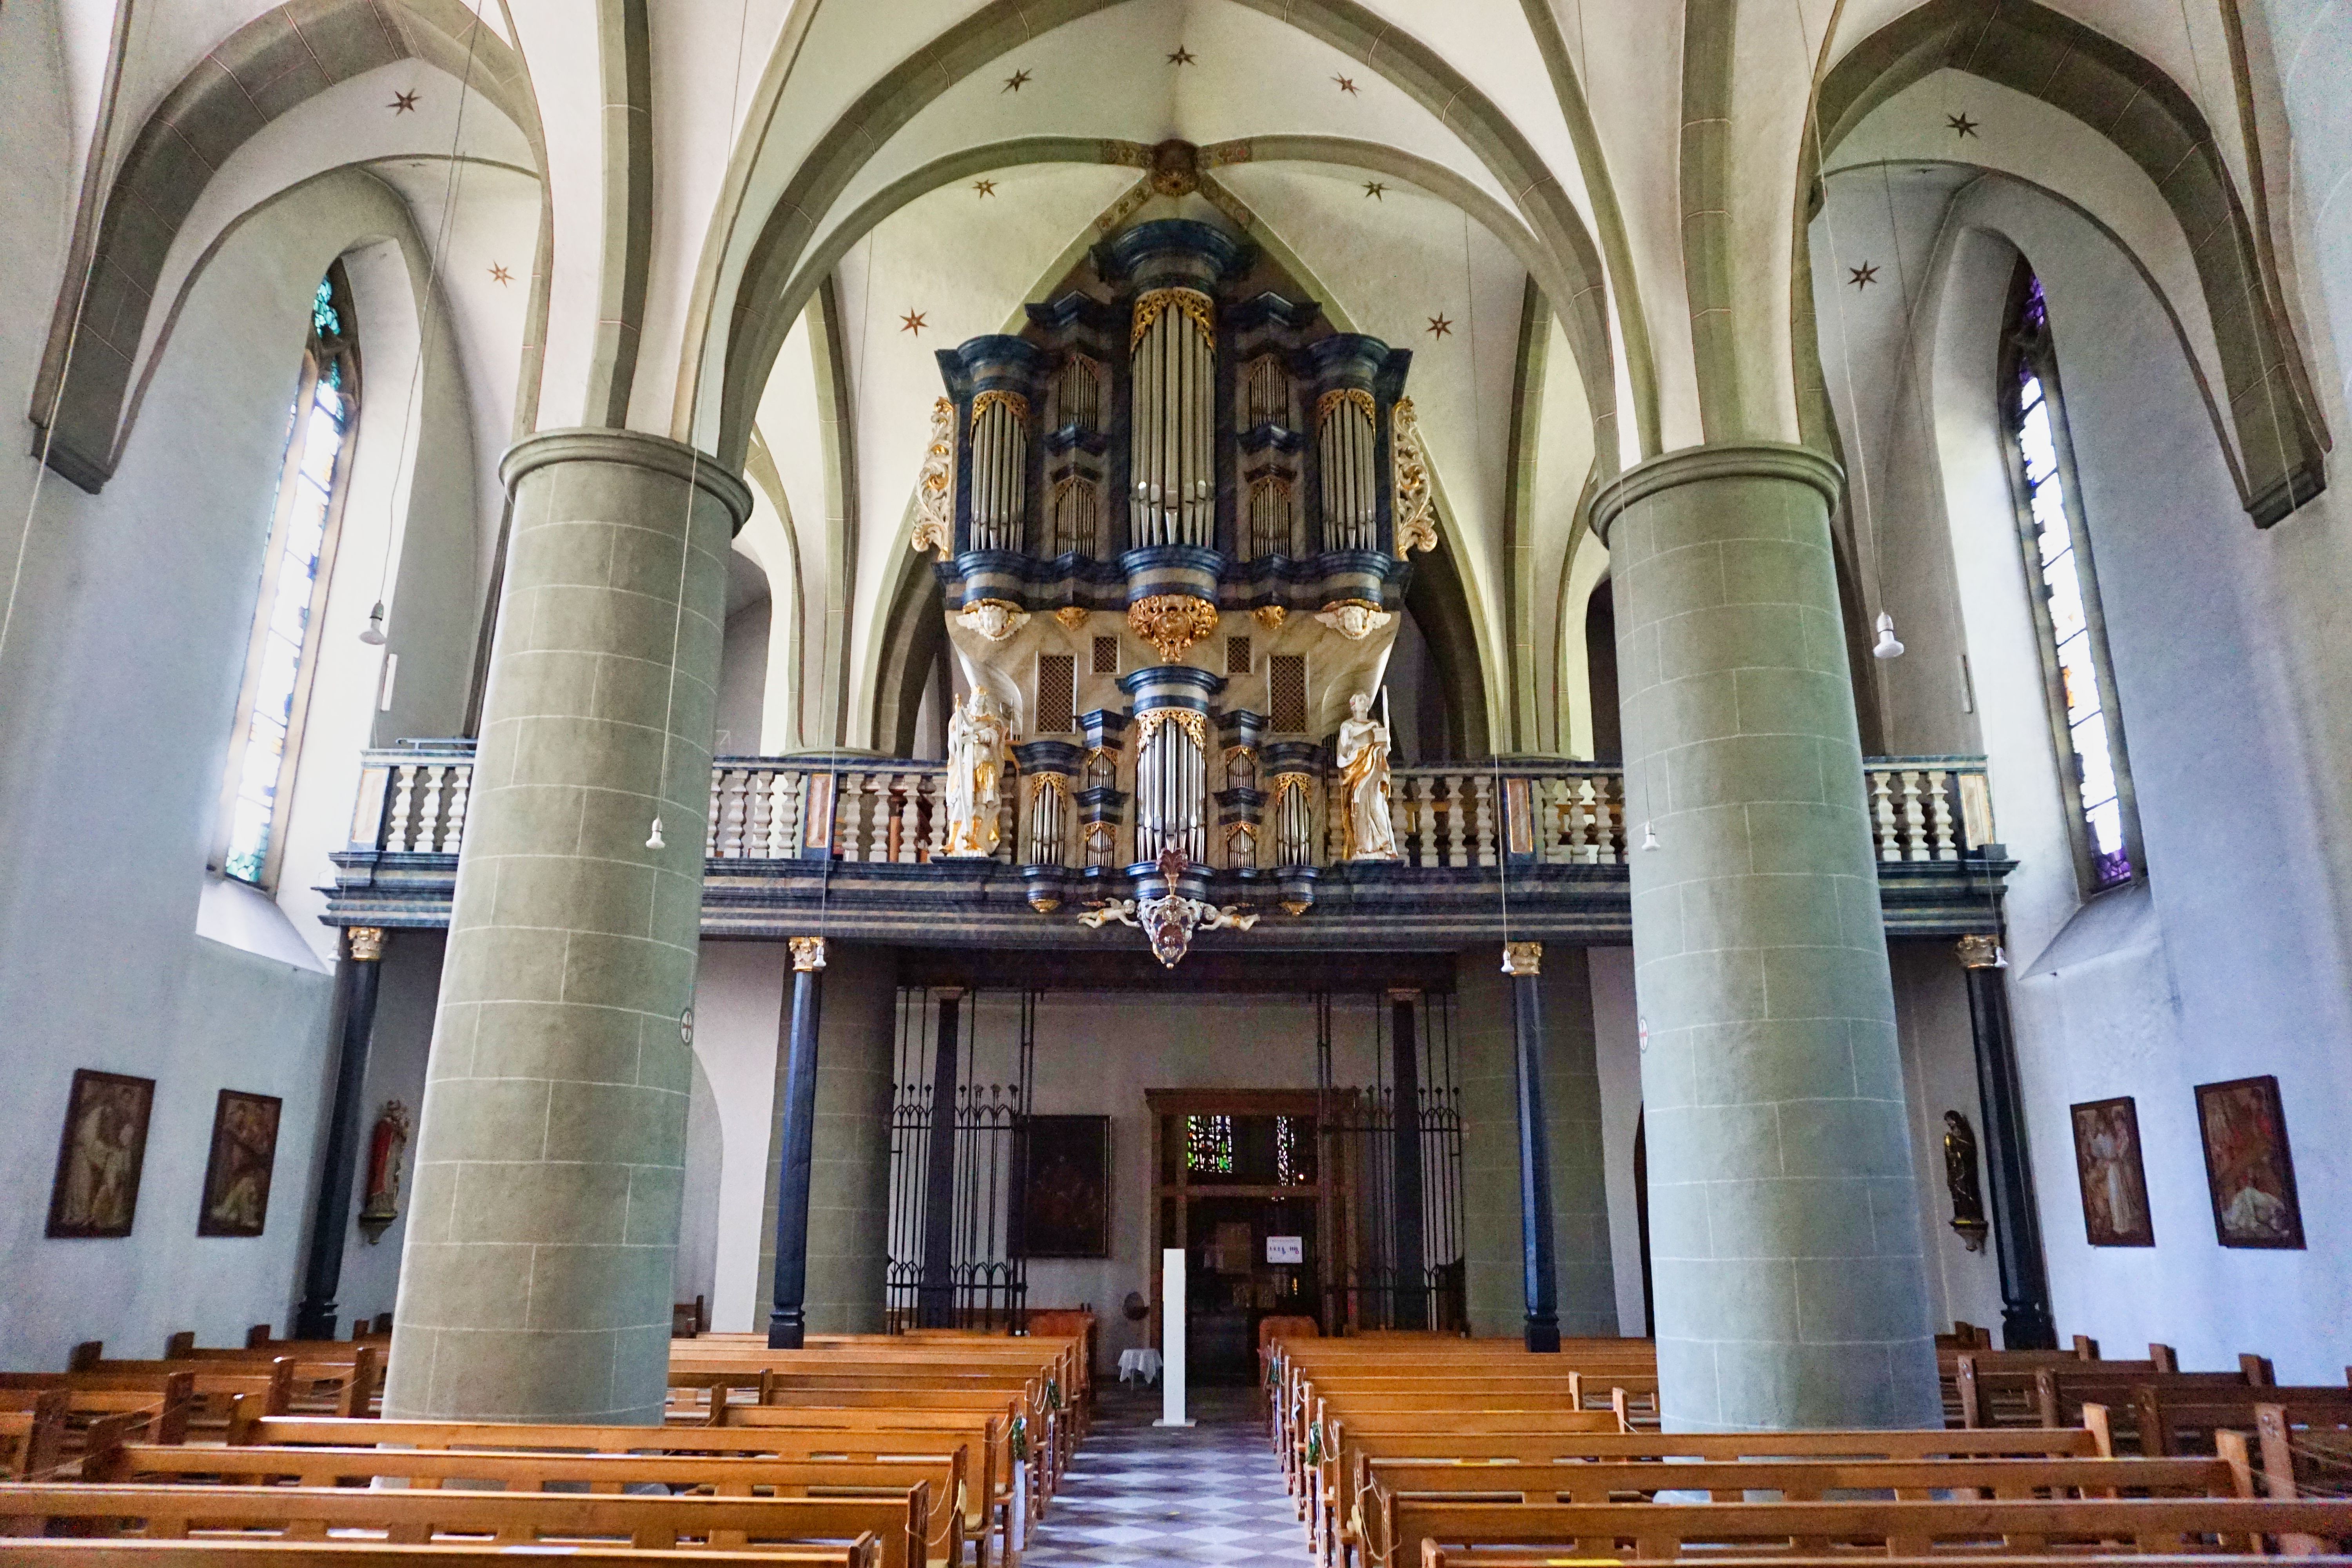 Orgel der Pfarrkirche St. Laurentius in Clarholz, Herzebrock-Clarholz.
